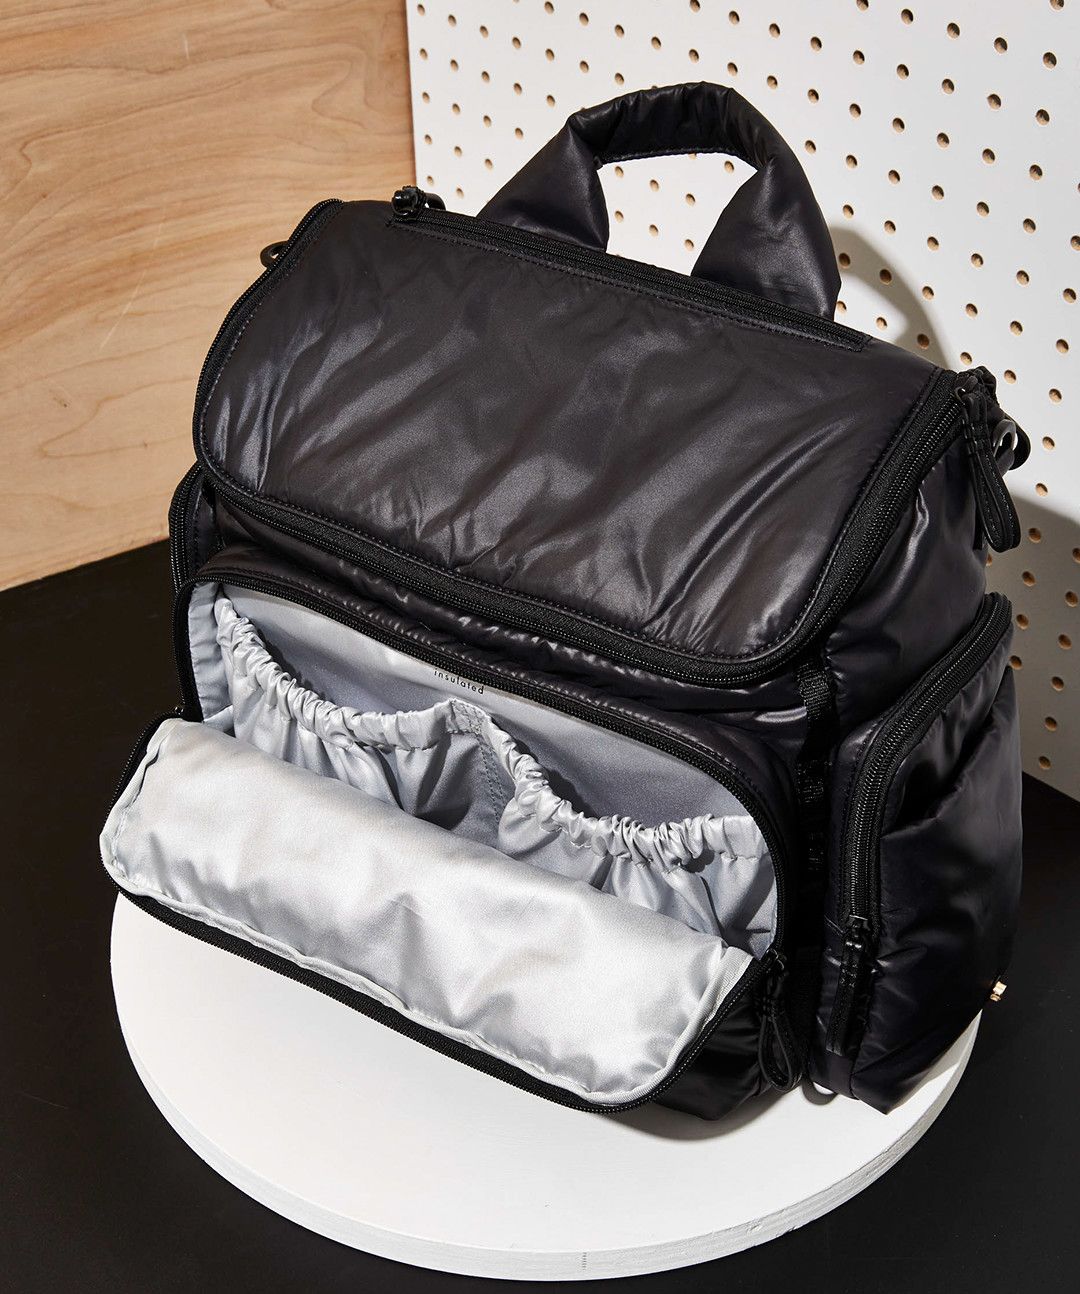 The Best Diaper Bag Backpack: Caraa Diaper Baby Bag Review - Mom